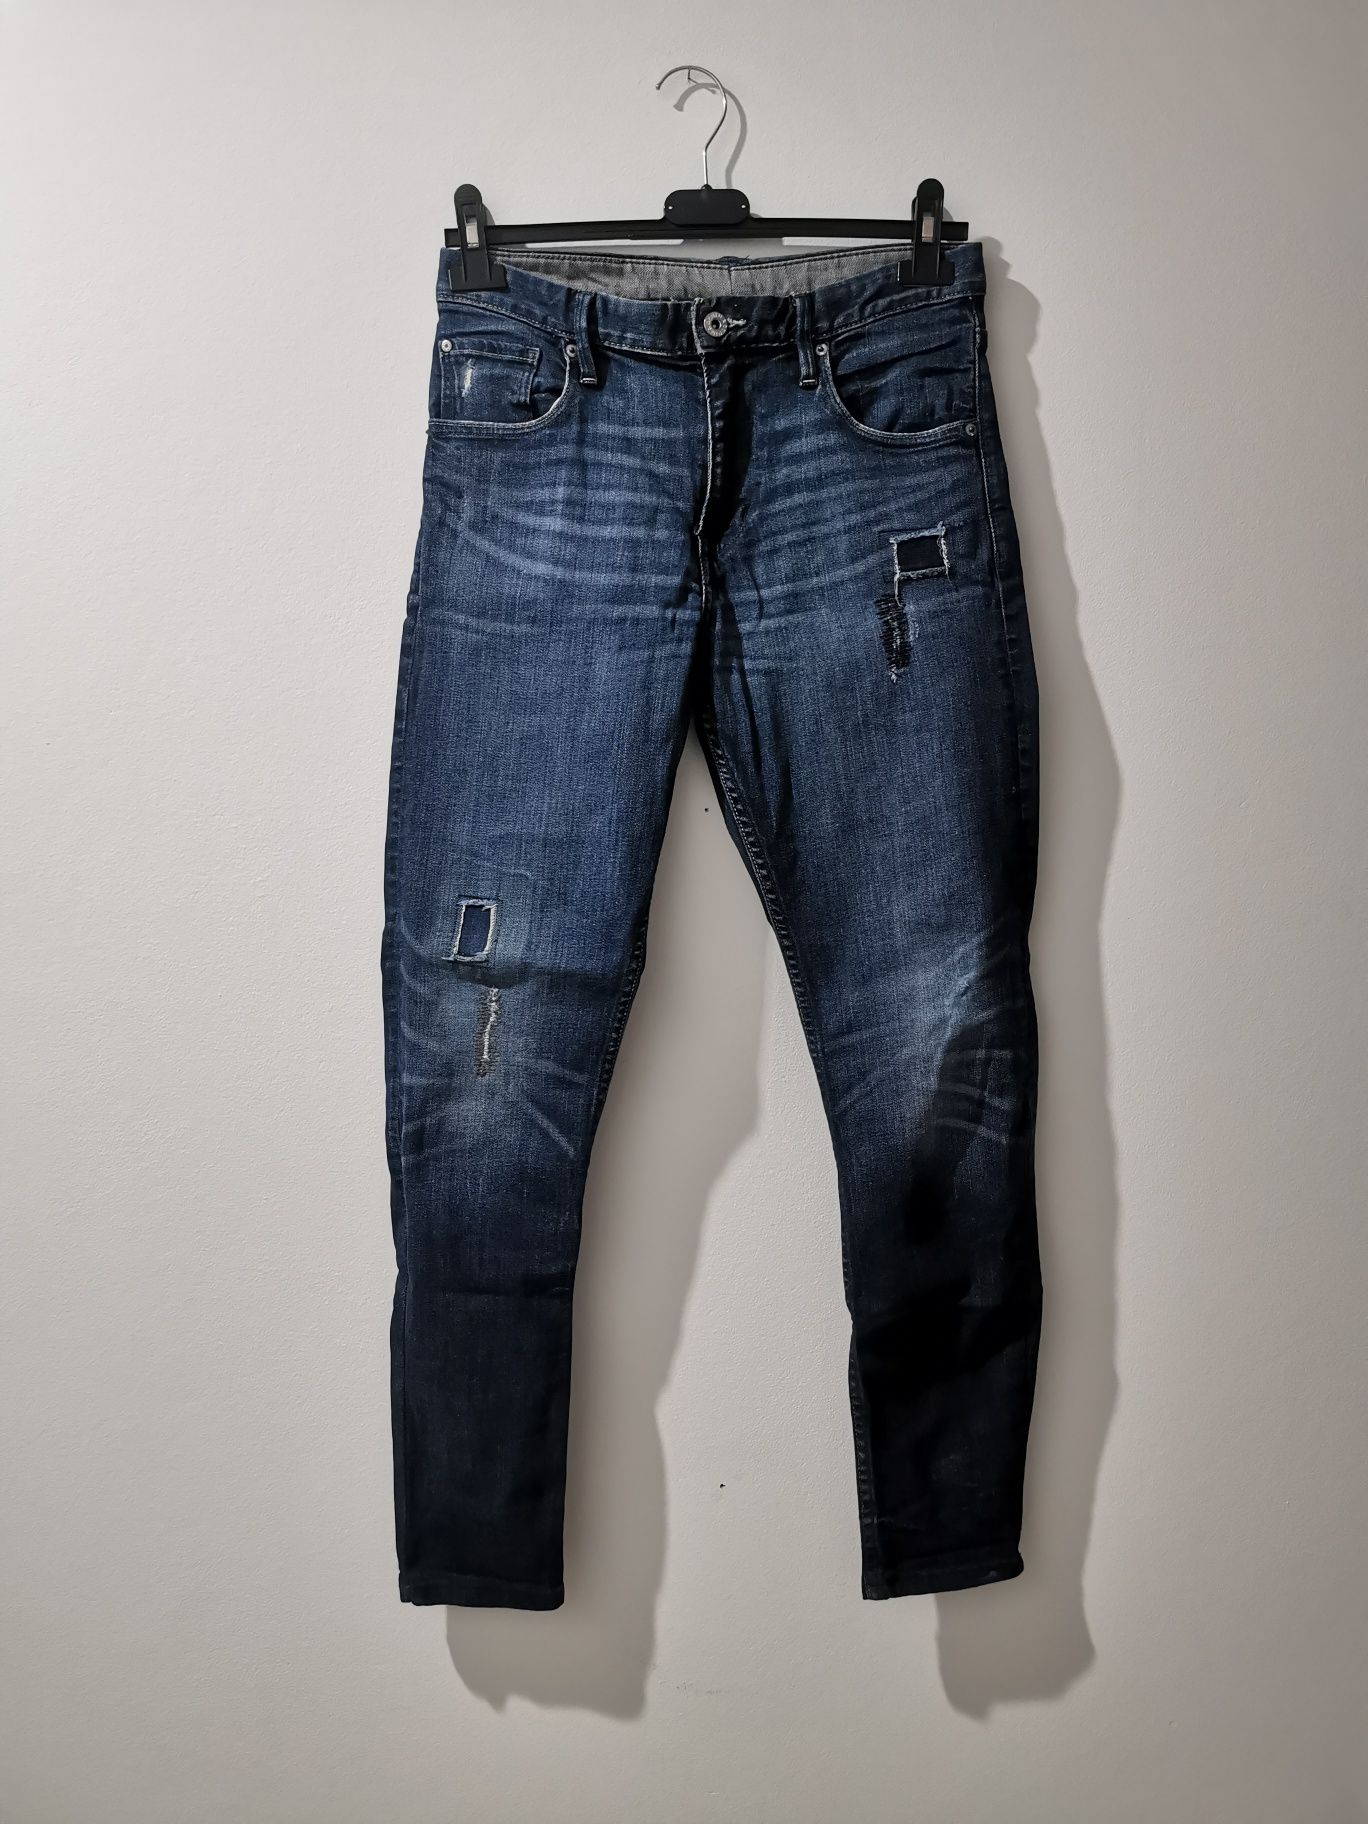 Spodnie jeansowe H&M retro vintage